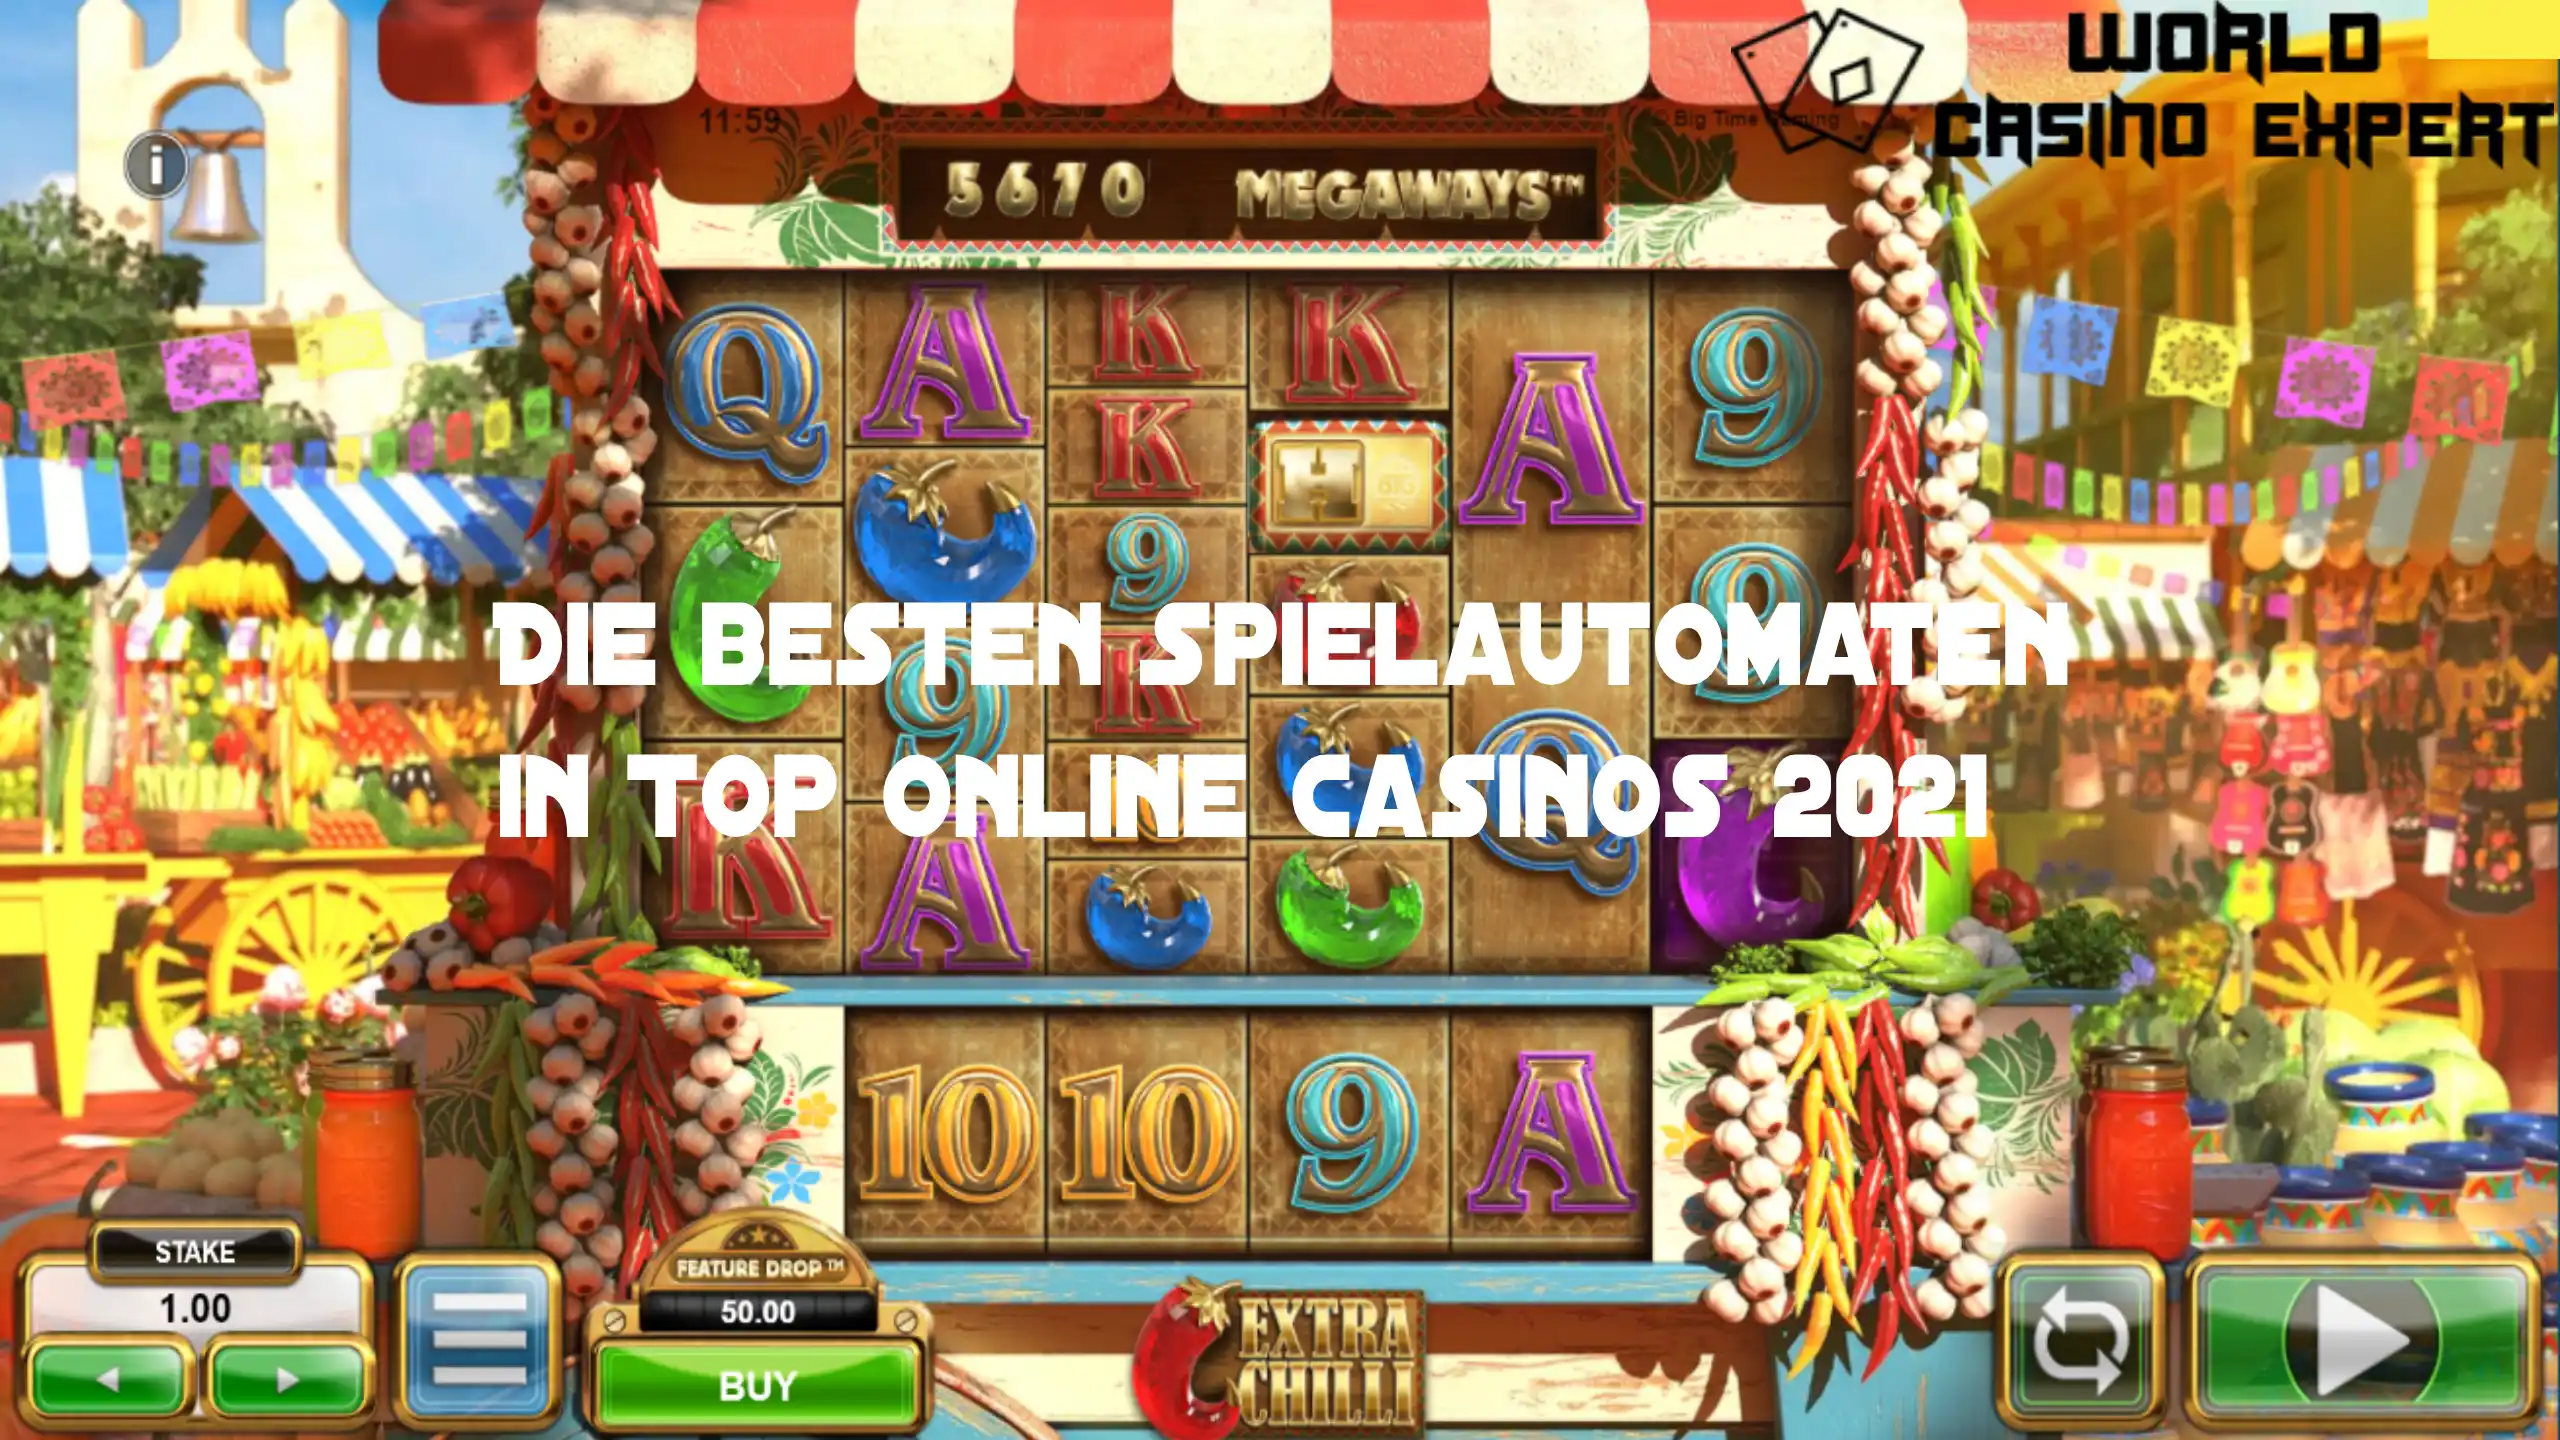 Die besten Spielautomaten in Top Online Casinos 2021 | World Casino Expert Germany